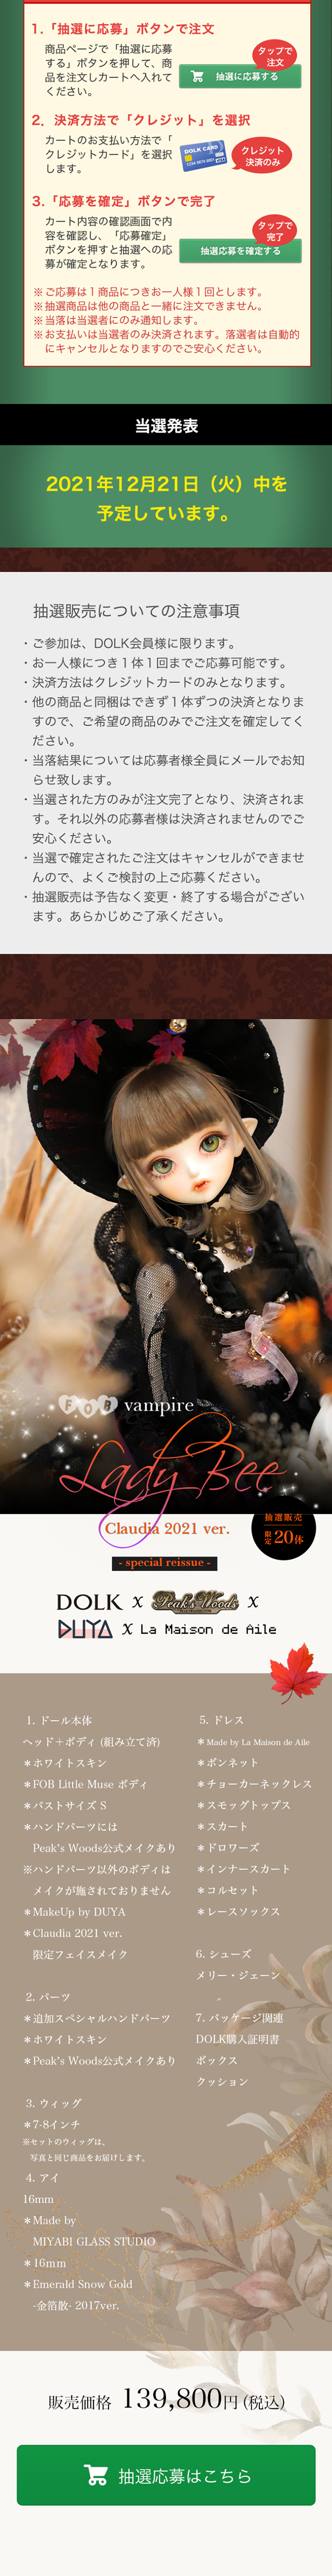 Vampire Lady Bee Claudia 2021_sp_2